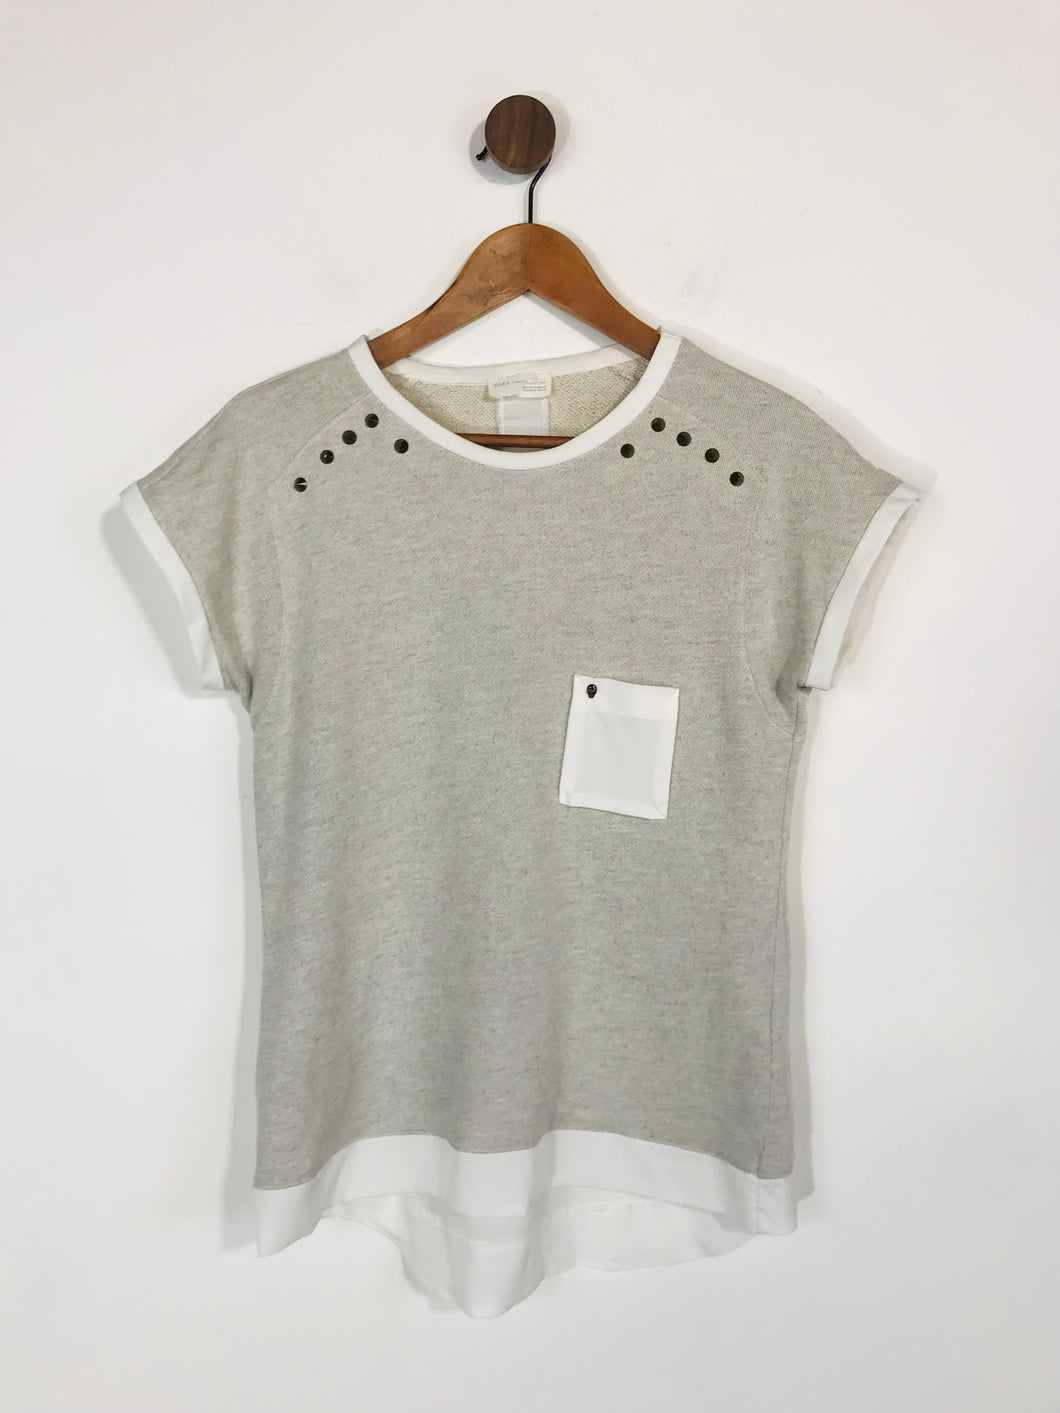 Zara Women's Pockets Embellished T-Shirt | M UK10-12 | Grey